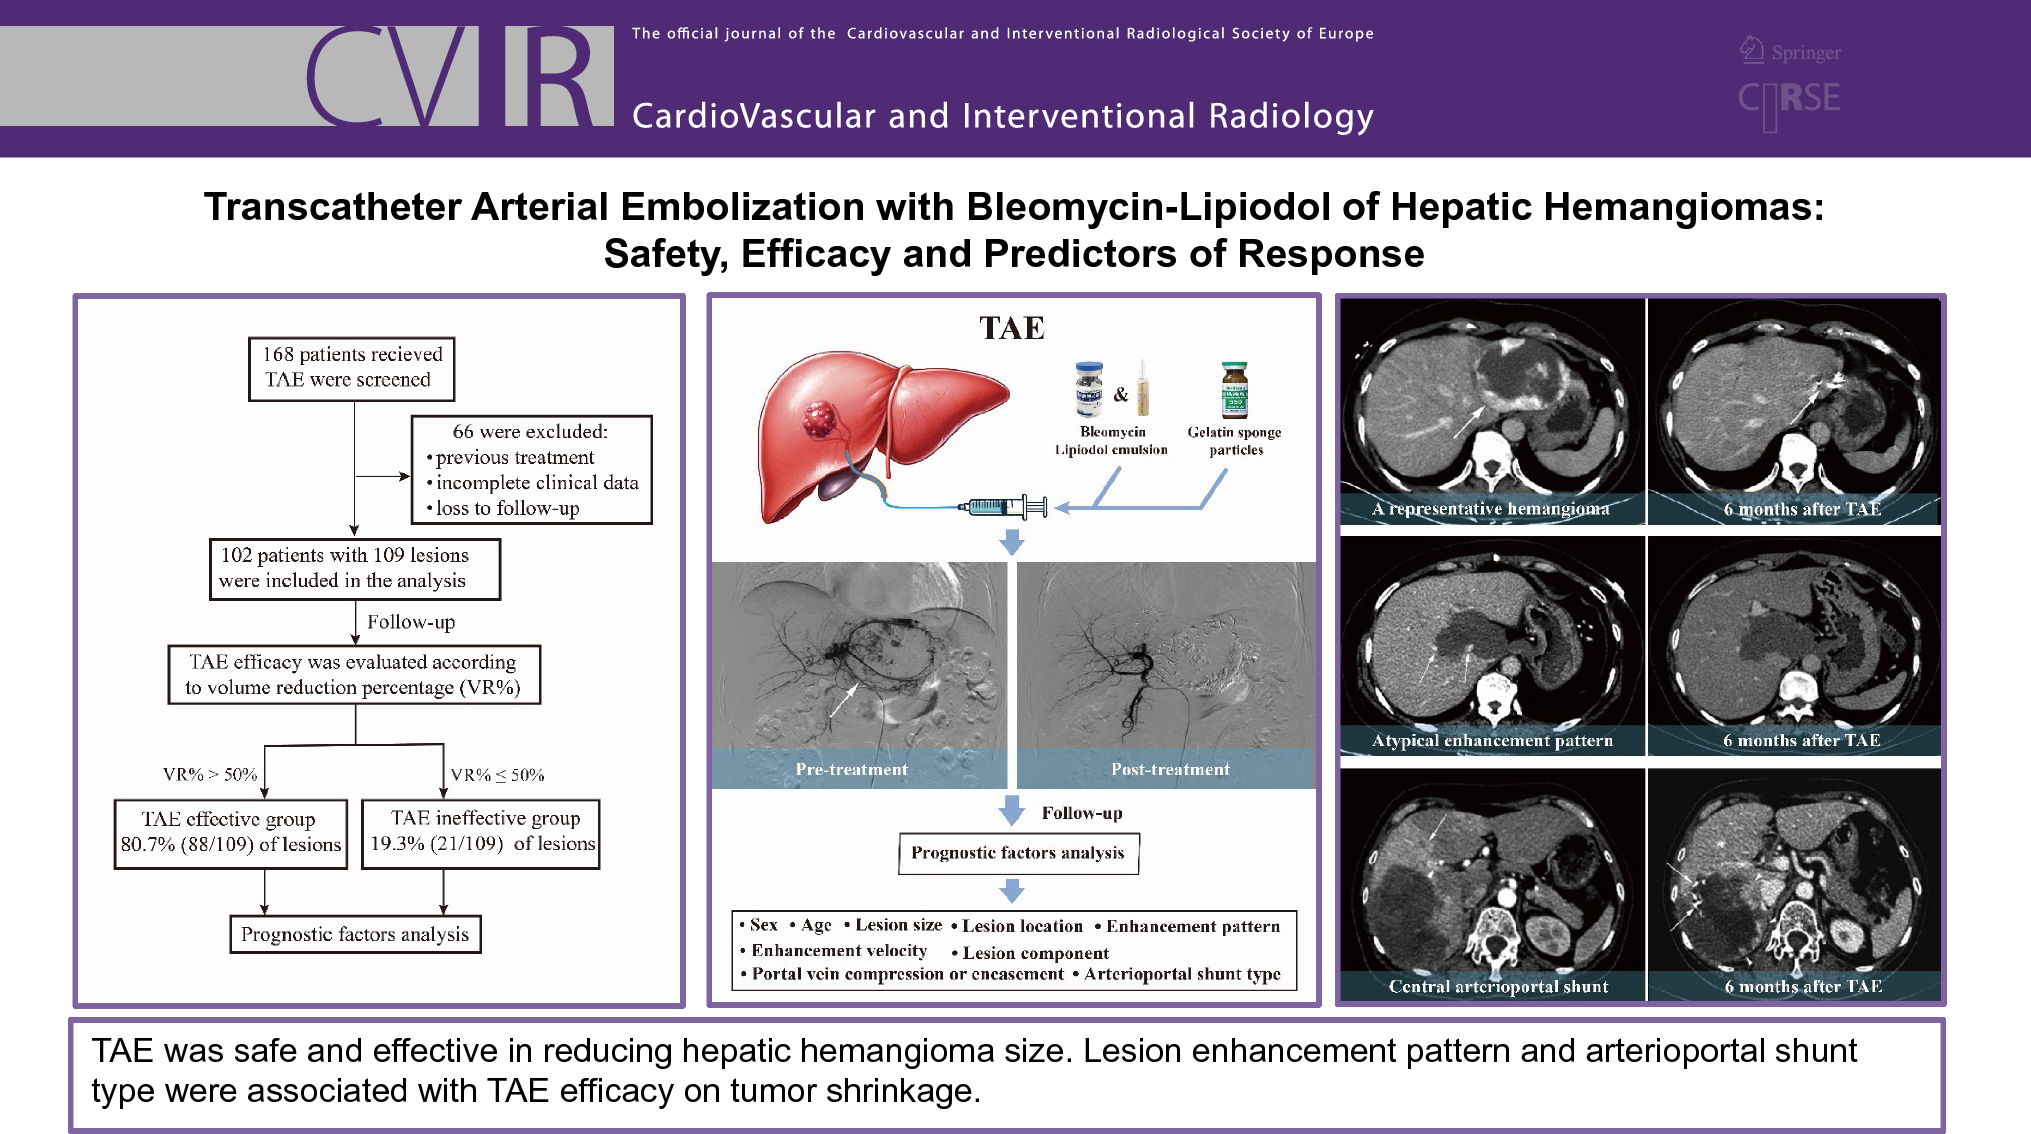 Transcatheter Arterial Embolization with Bleomycin-Lipiodol of Hepatic Hemangiomas: Safety, Efficacy and Predictors of Response